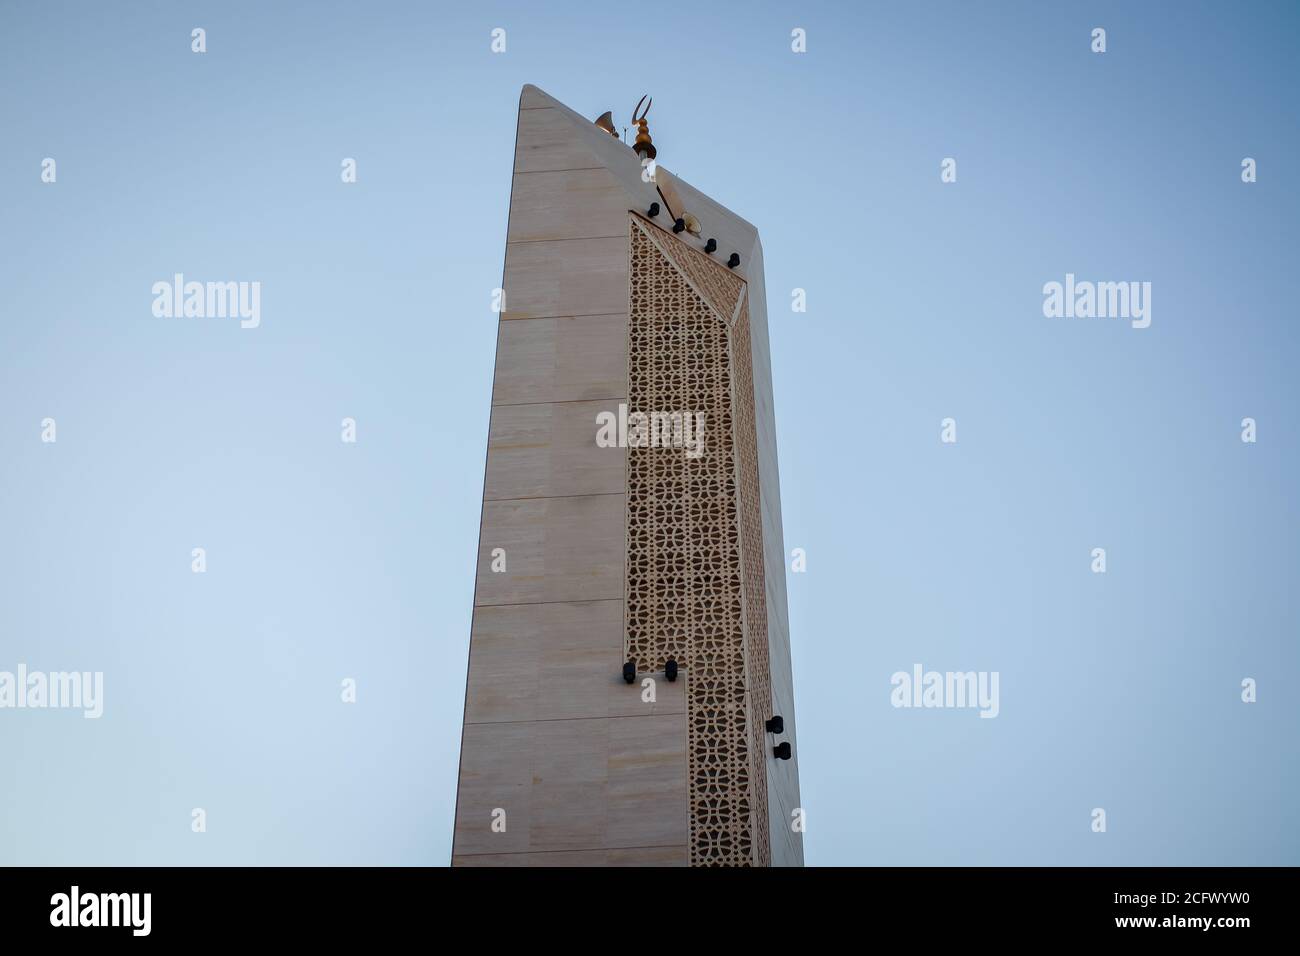 Islamic Mosque Minaret tower, Modern design with sunrise background. Stock Photo